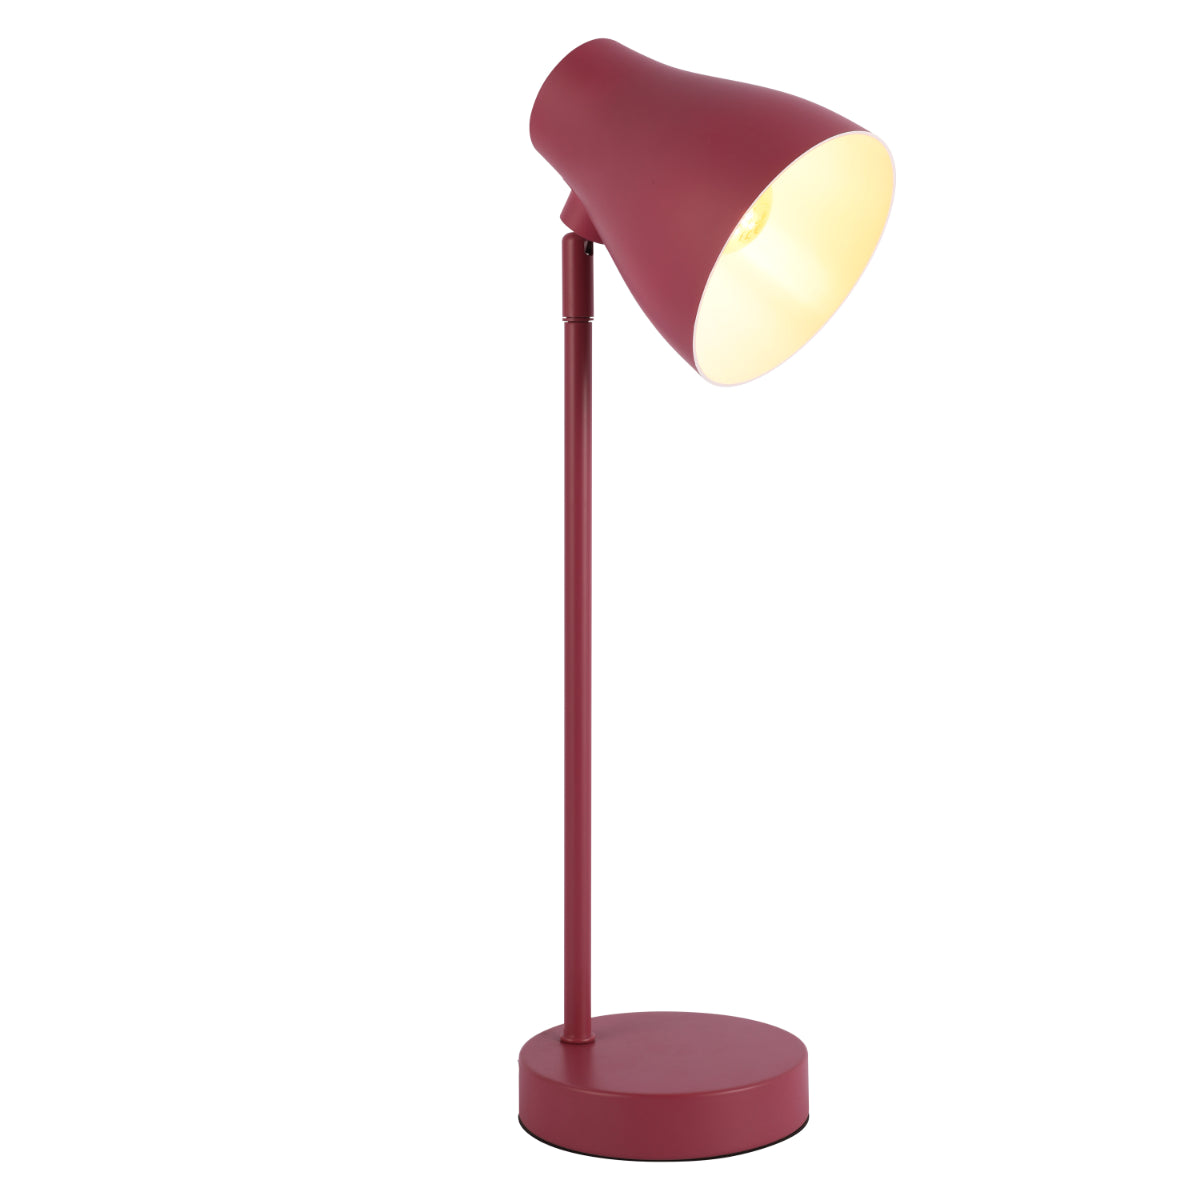 Main image of Elegant Rotatable Desk Lamp in Assorted Colors 130-03648